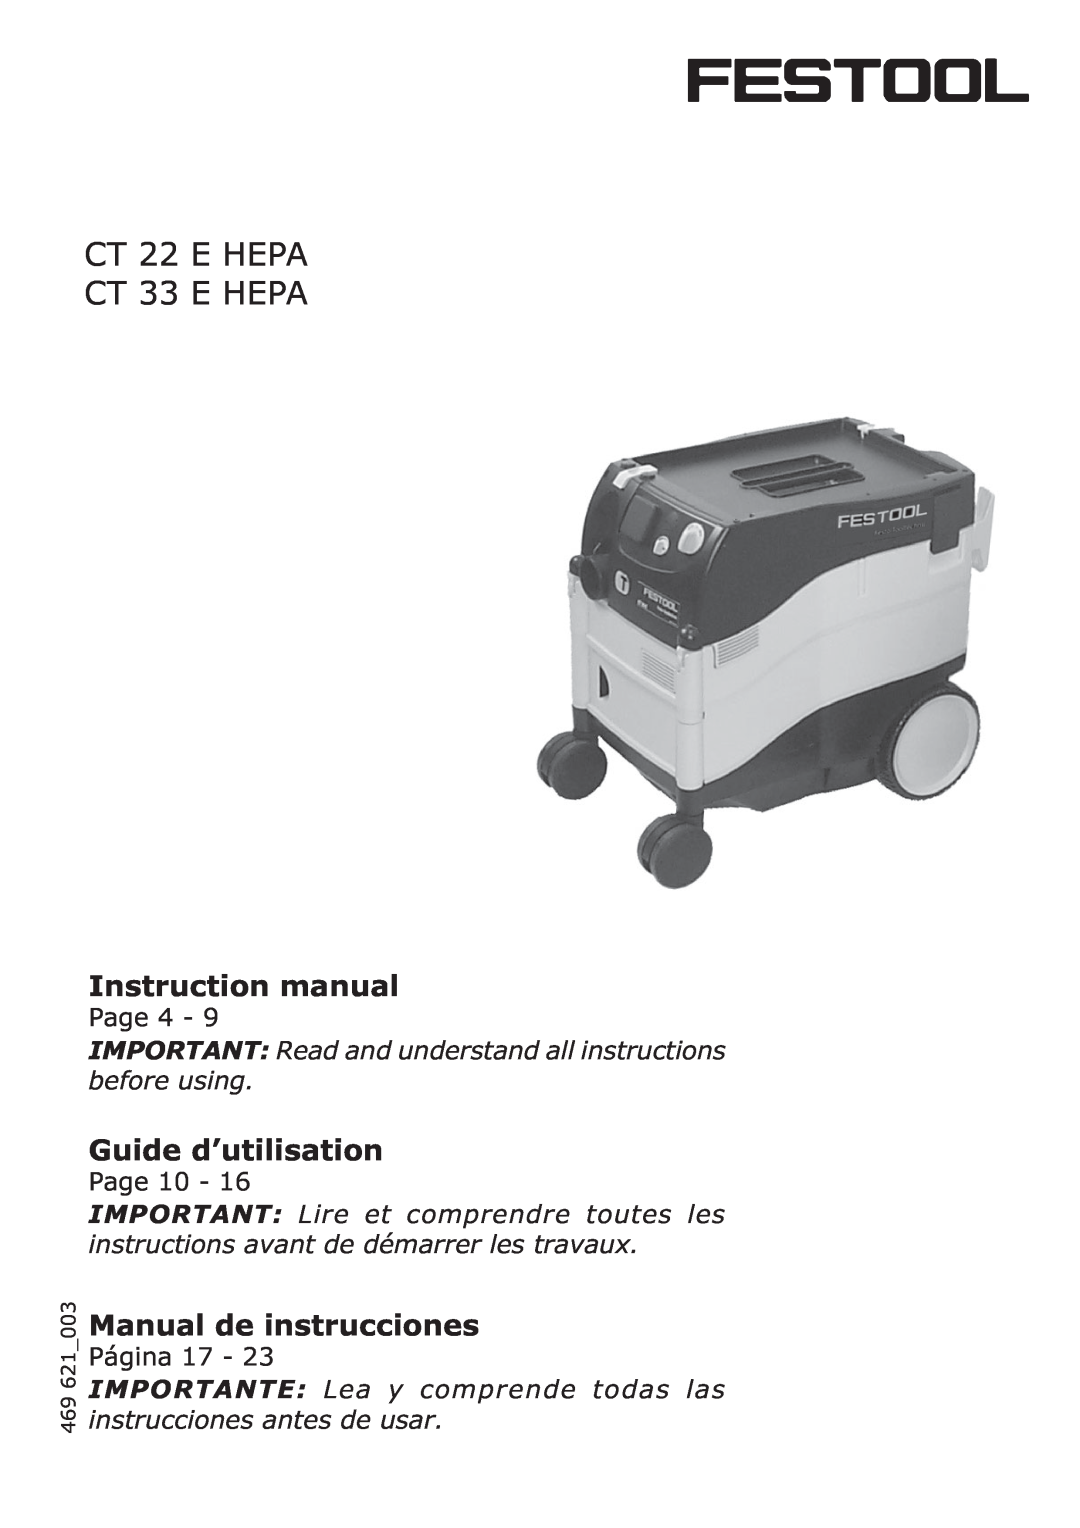 Festool instruction manual CT 22 E HEPA CT 33 E HEPA, Guide d’utilisation, Manual de instrucciones 